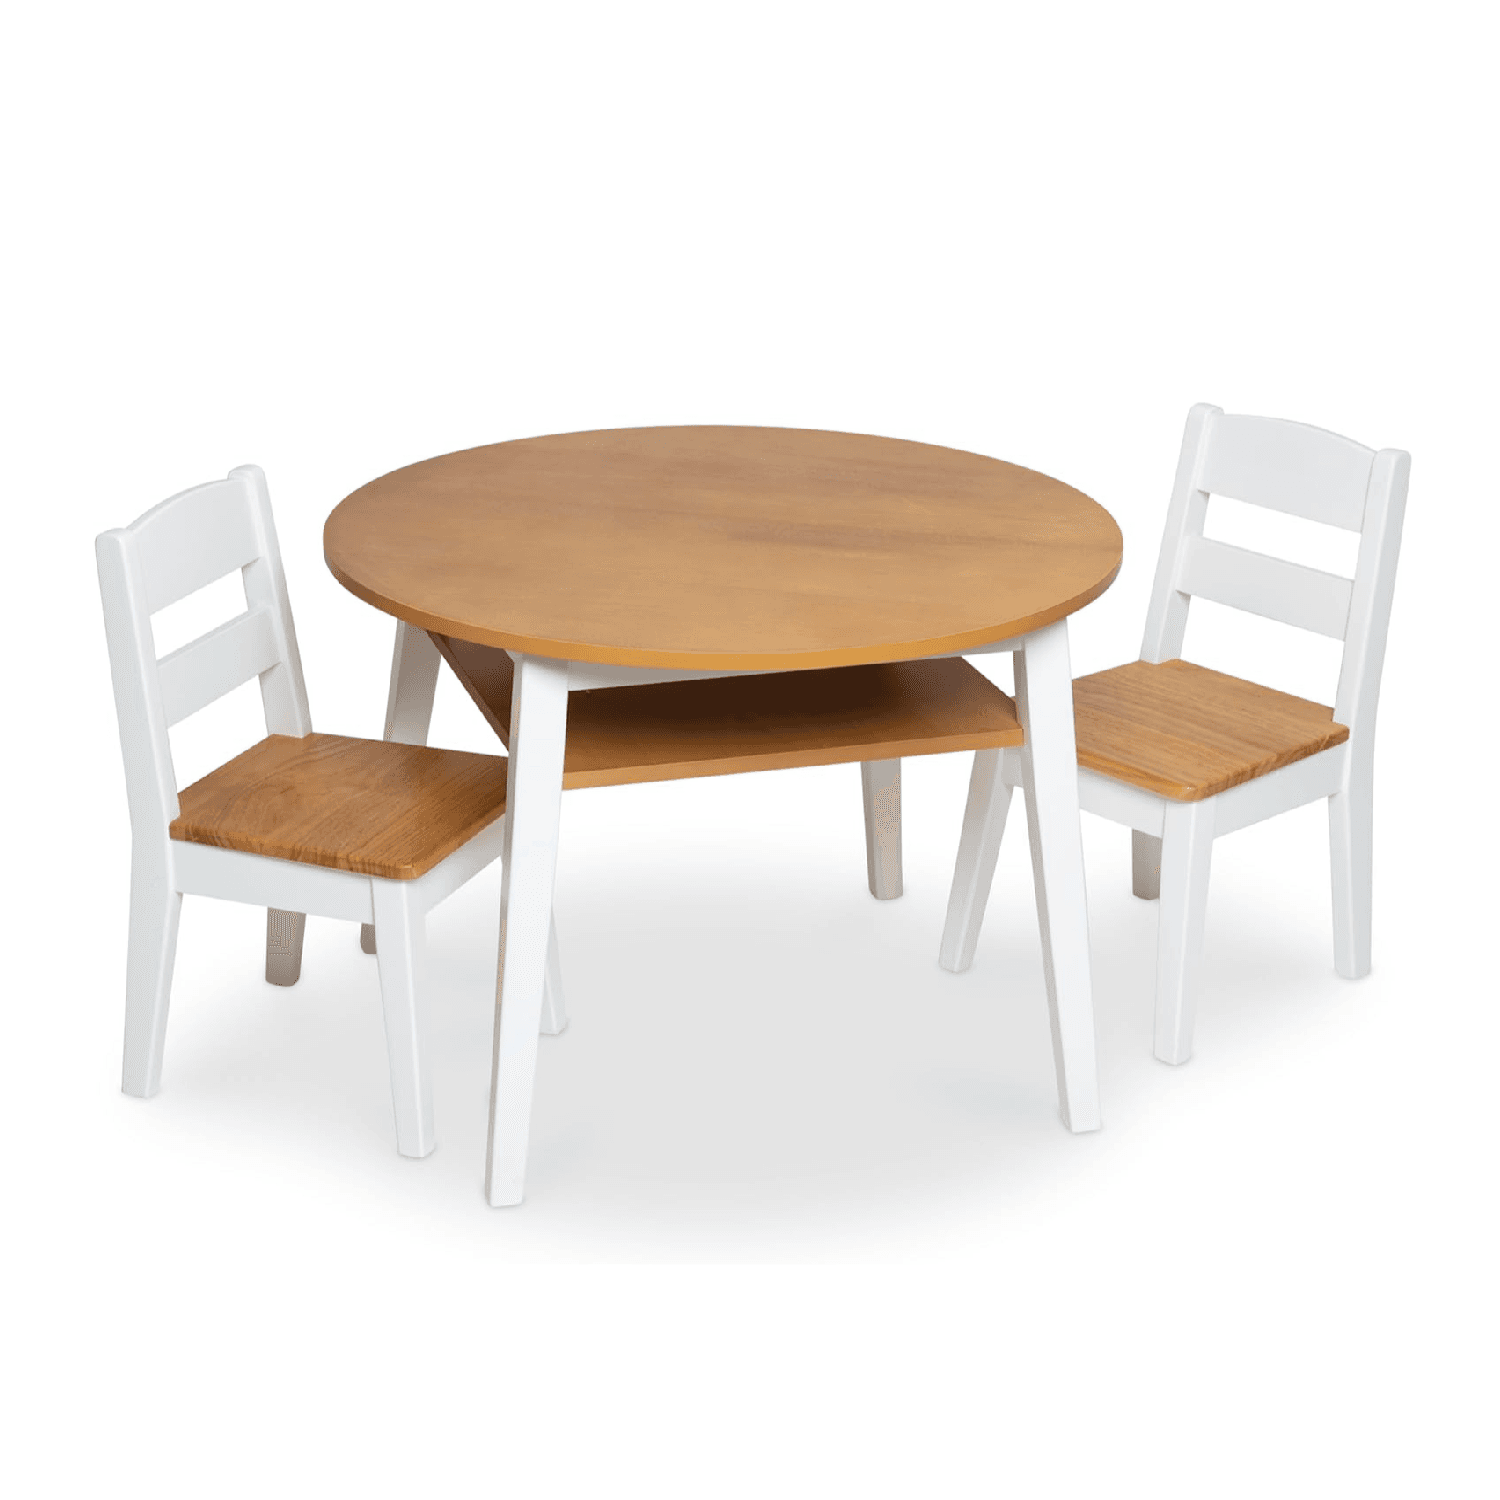 Montessori Melissa & Doug Wooden Round Table & 2 Chairs